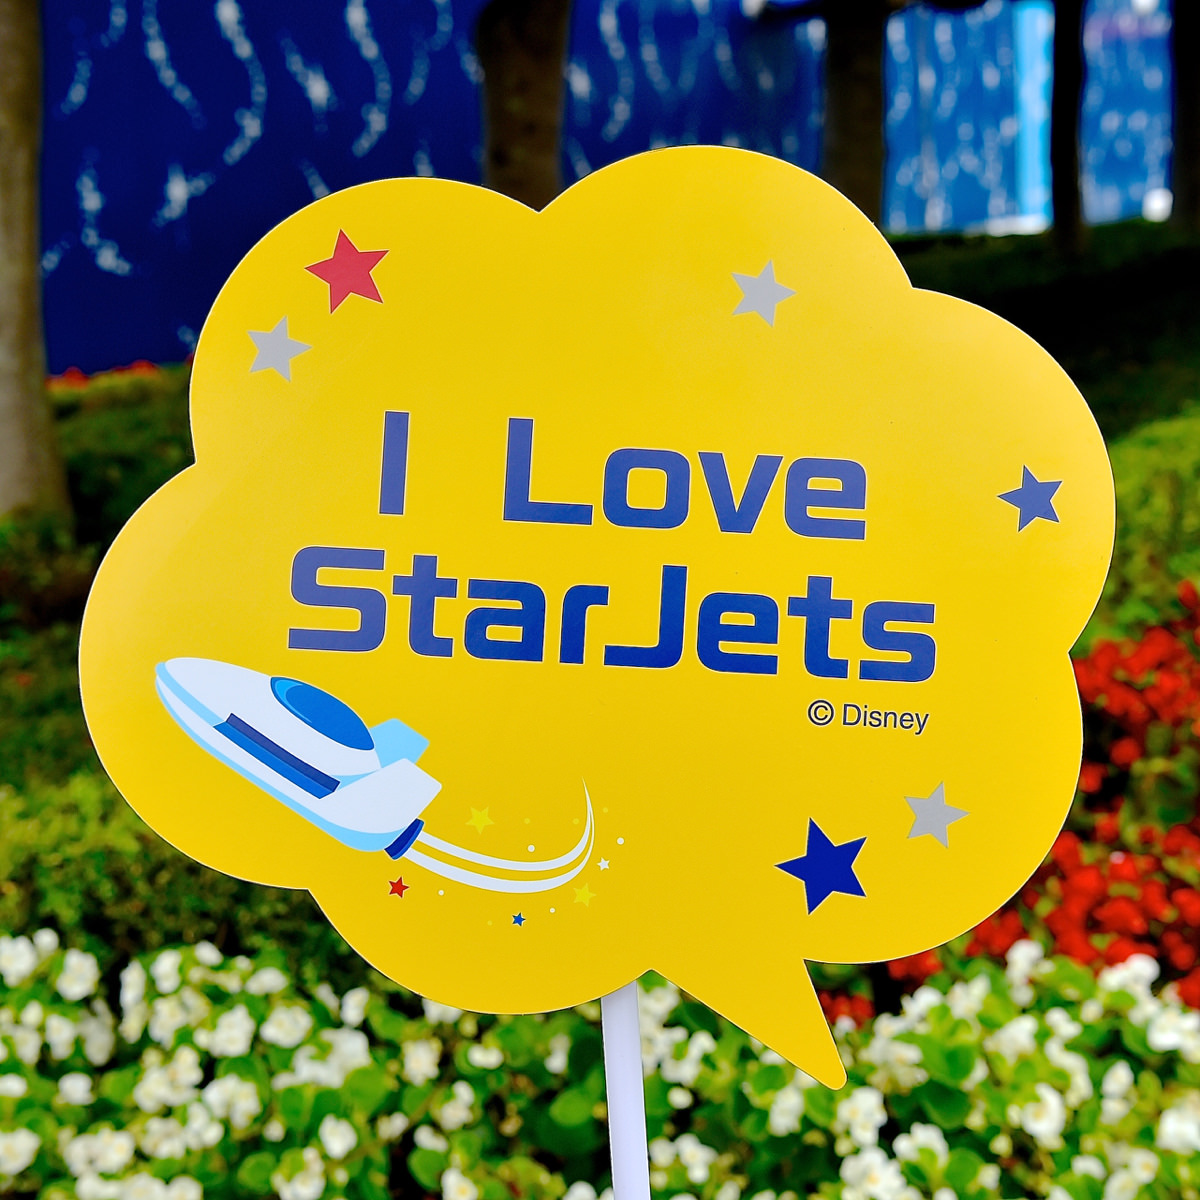 I Love Starjets